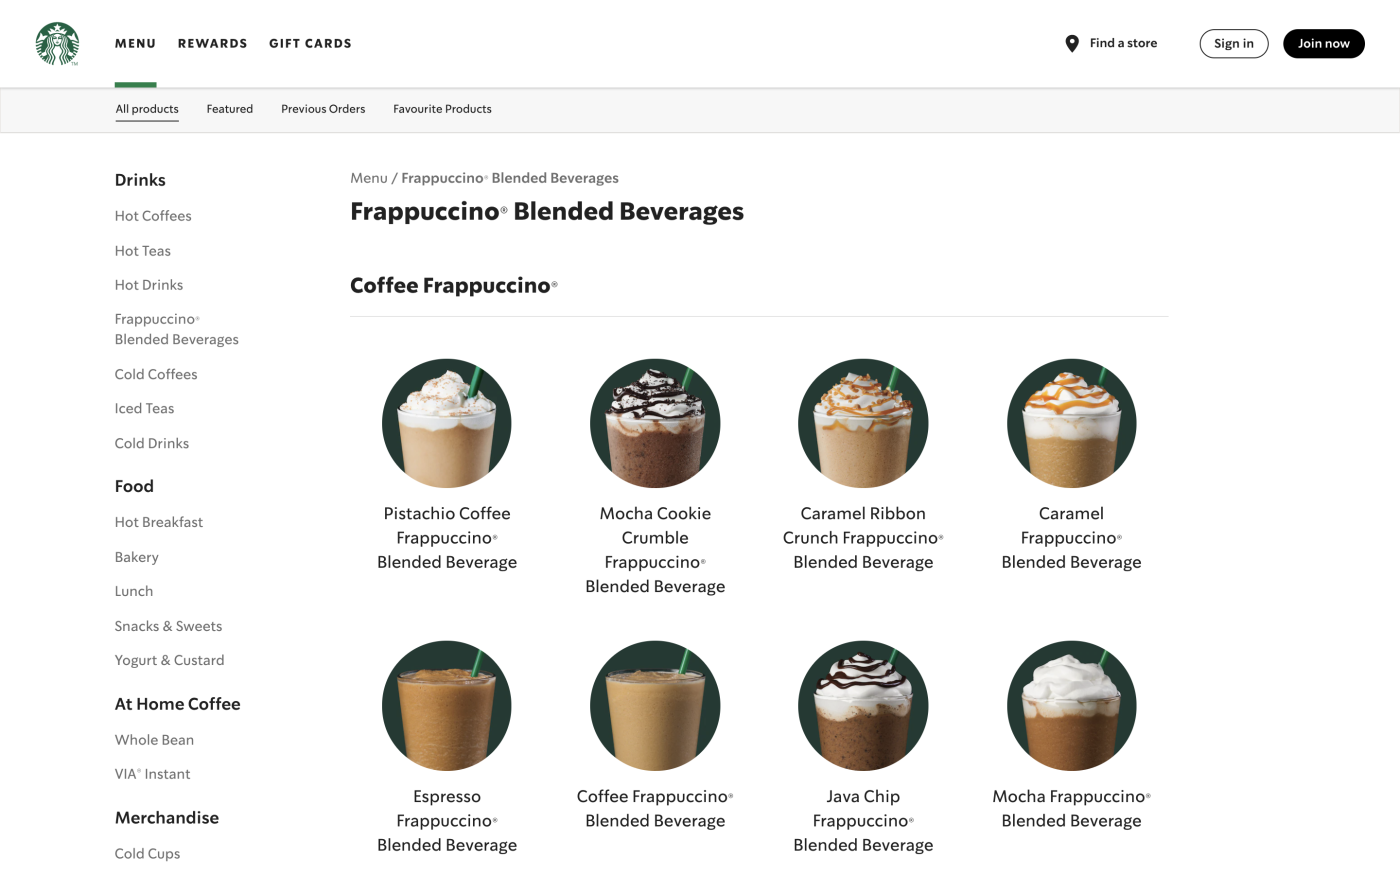 A screenshot from the Starbucks menu